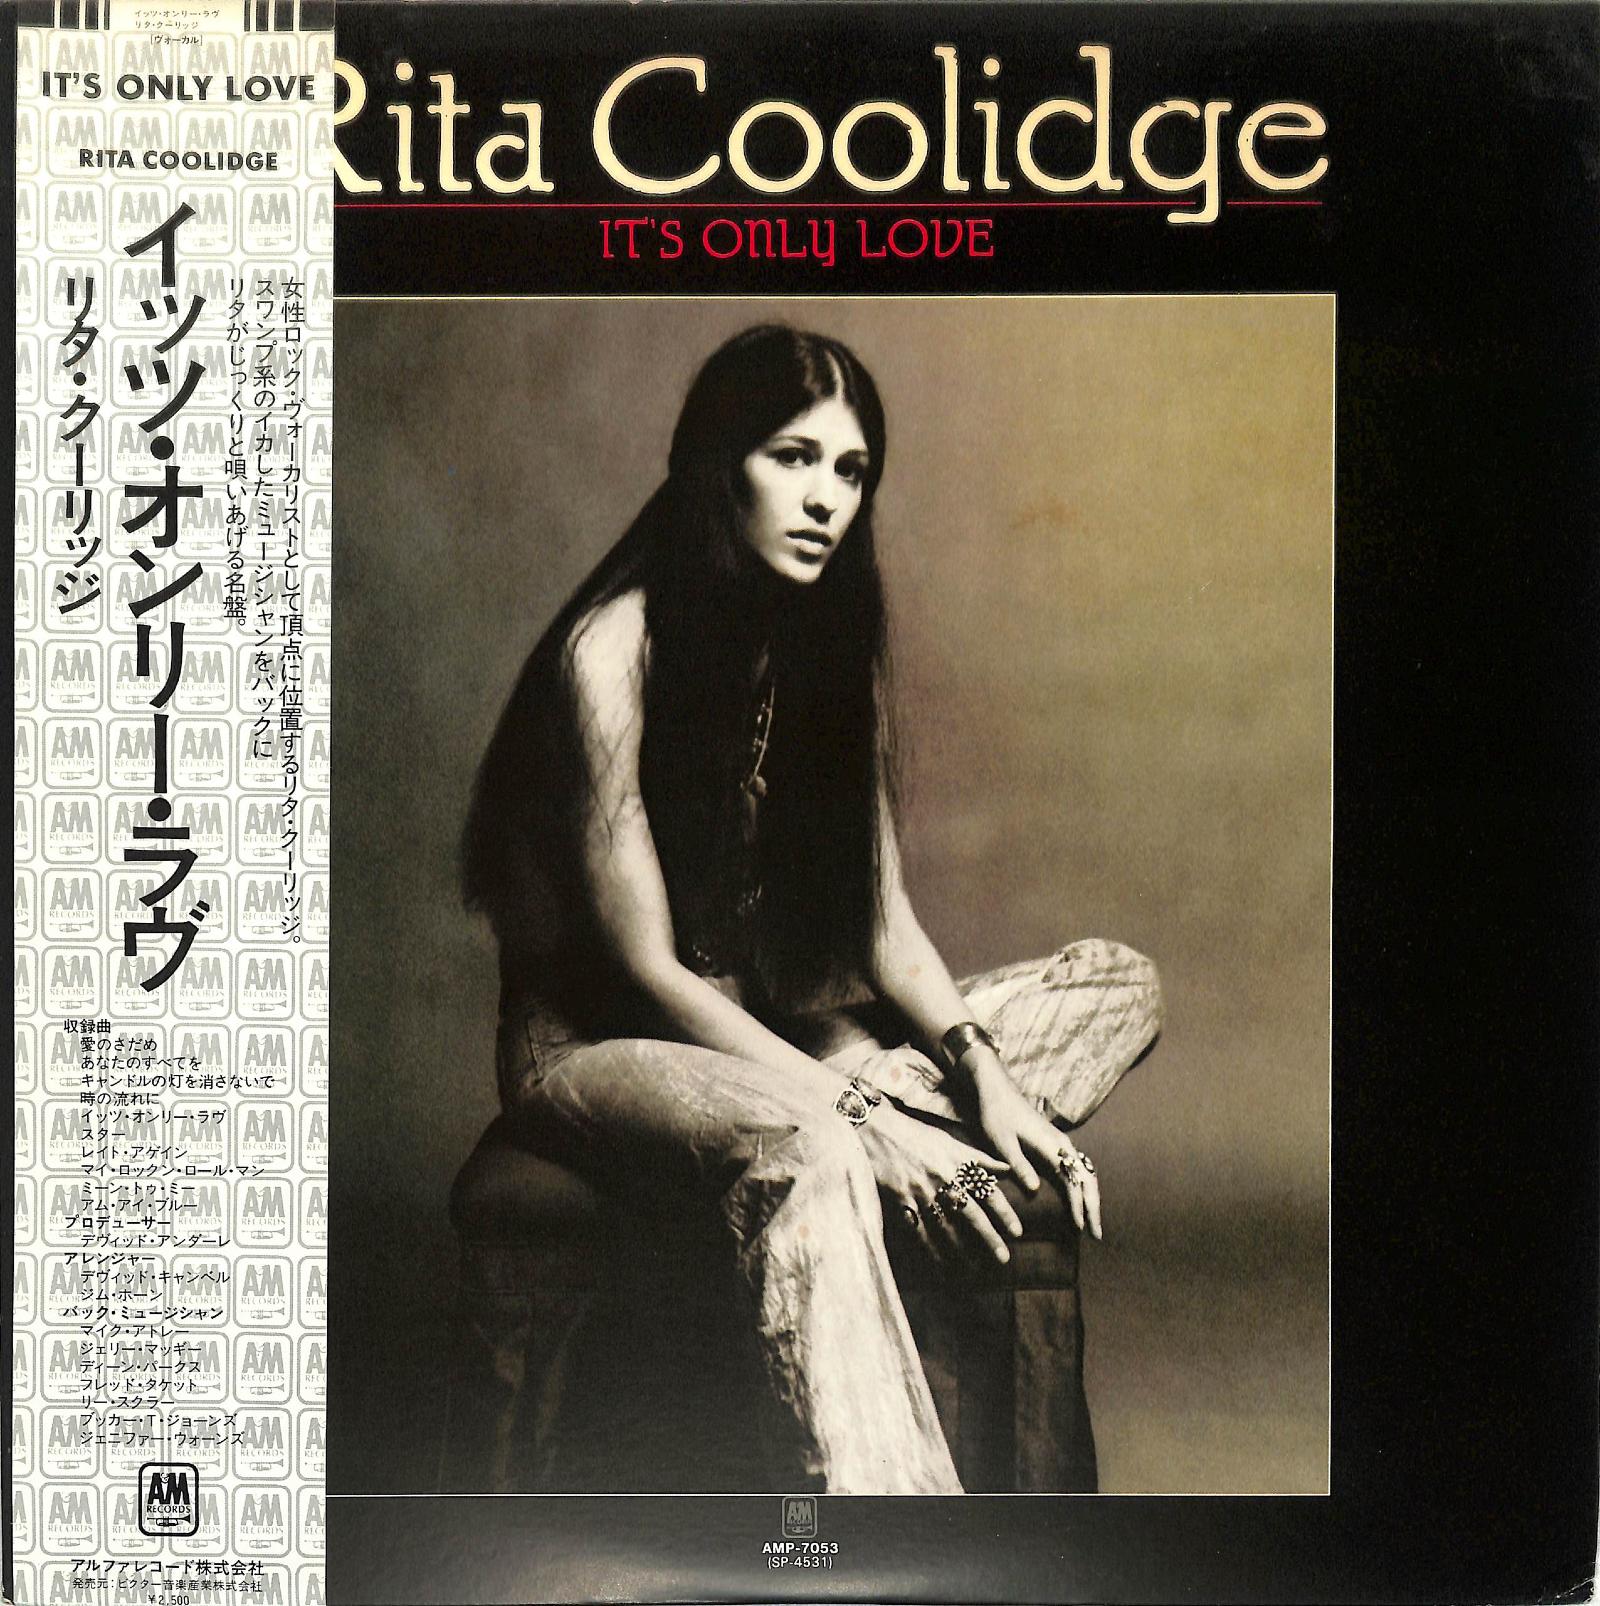 RITA COOLIDGE - It's Only Love